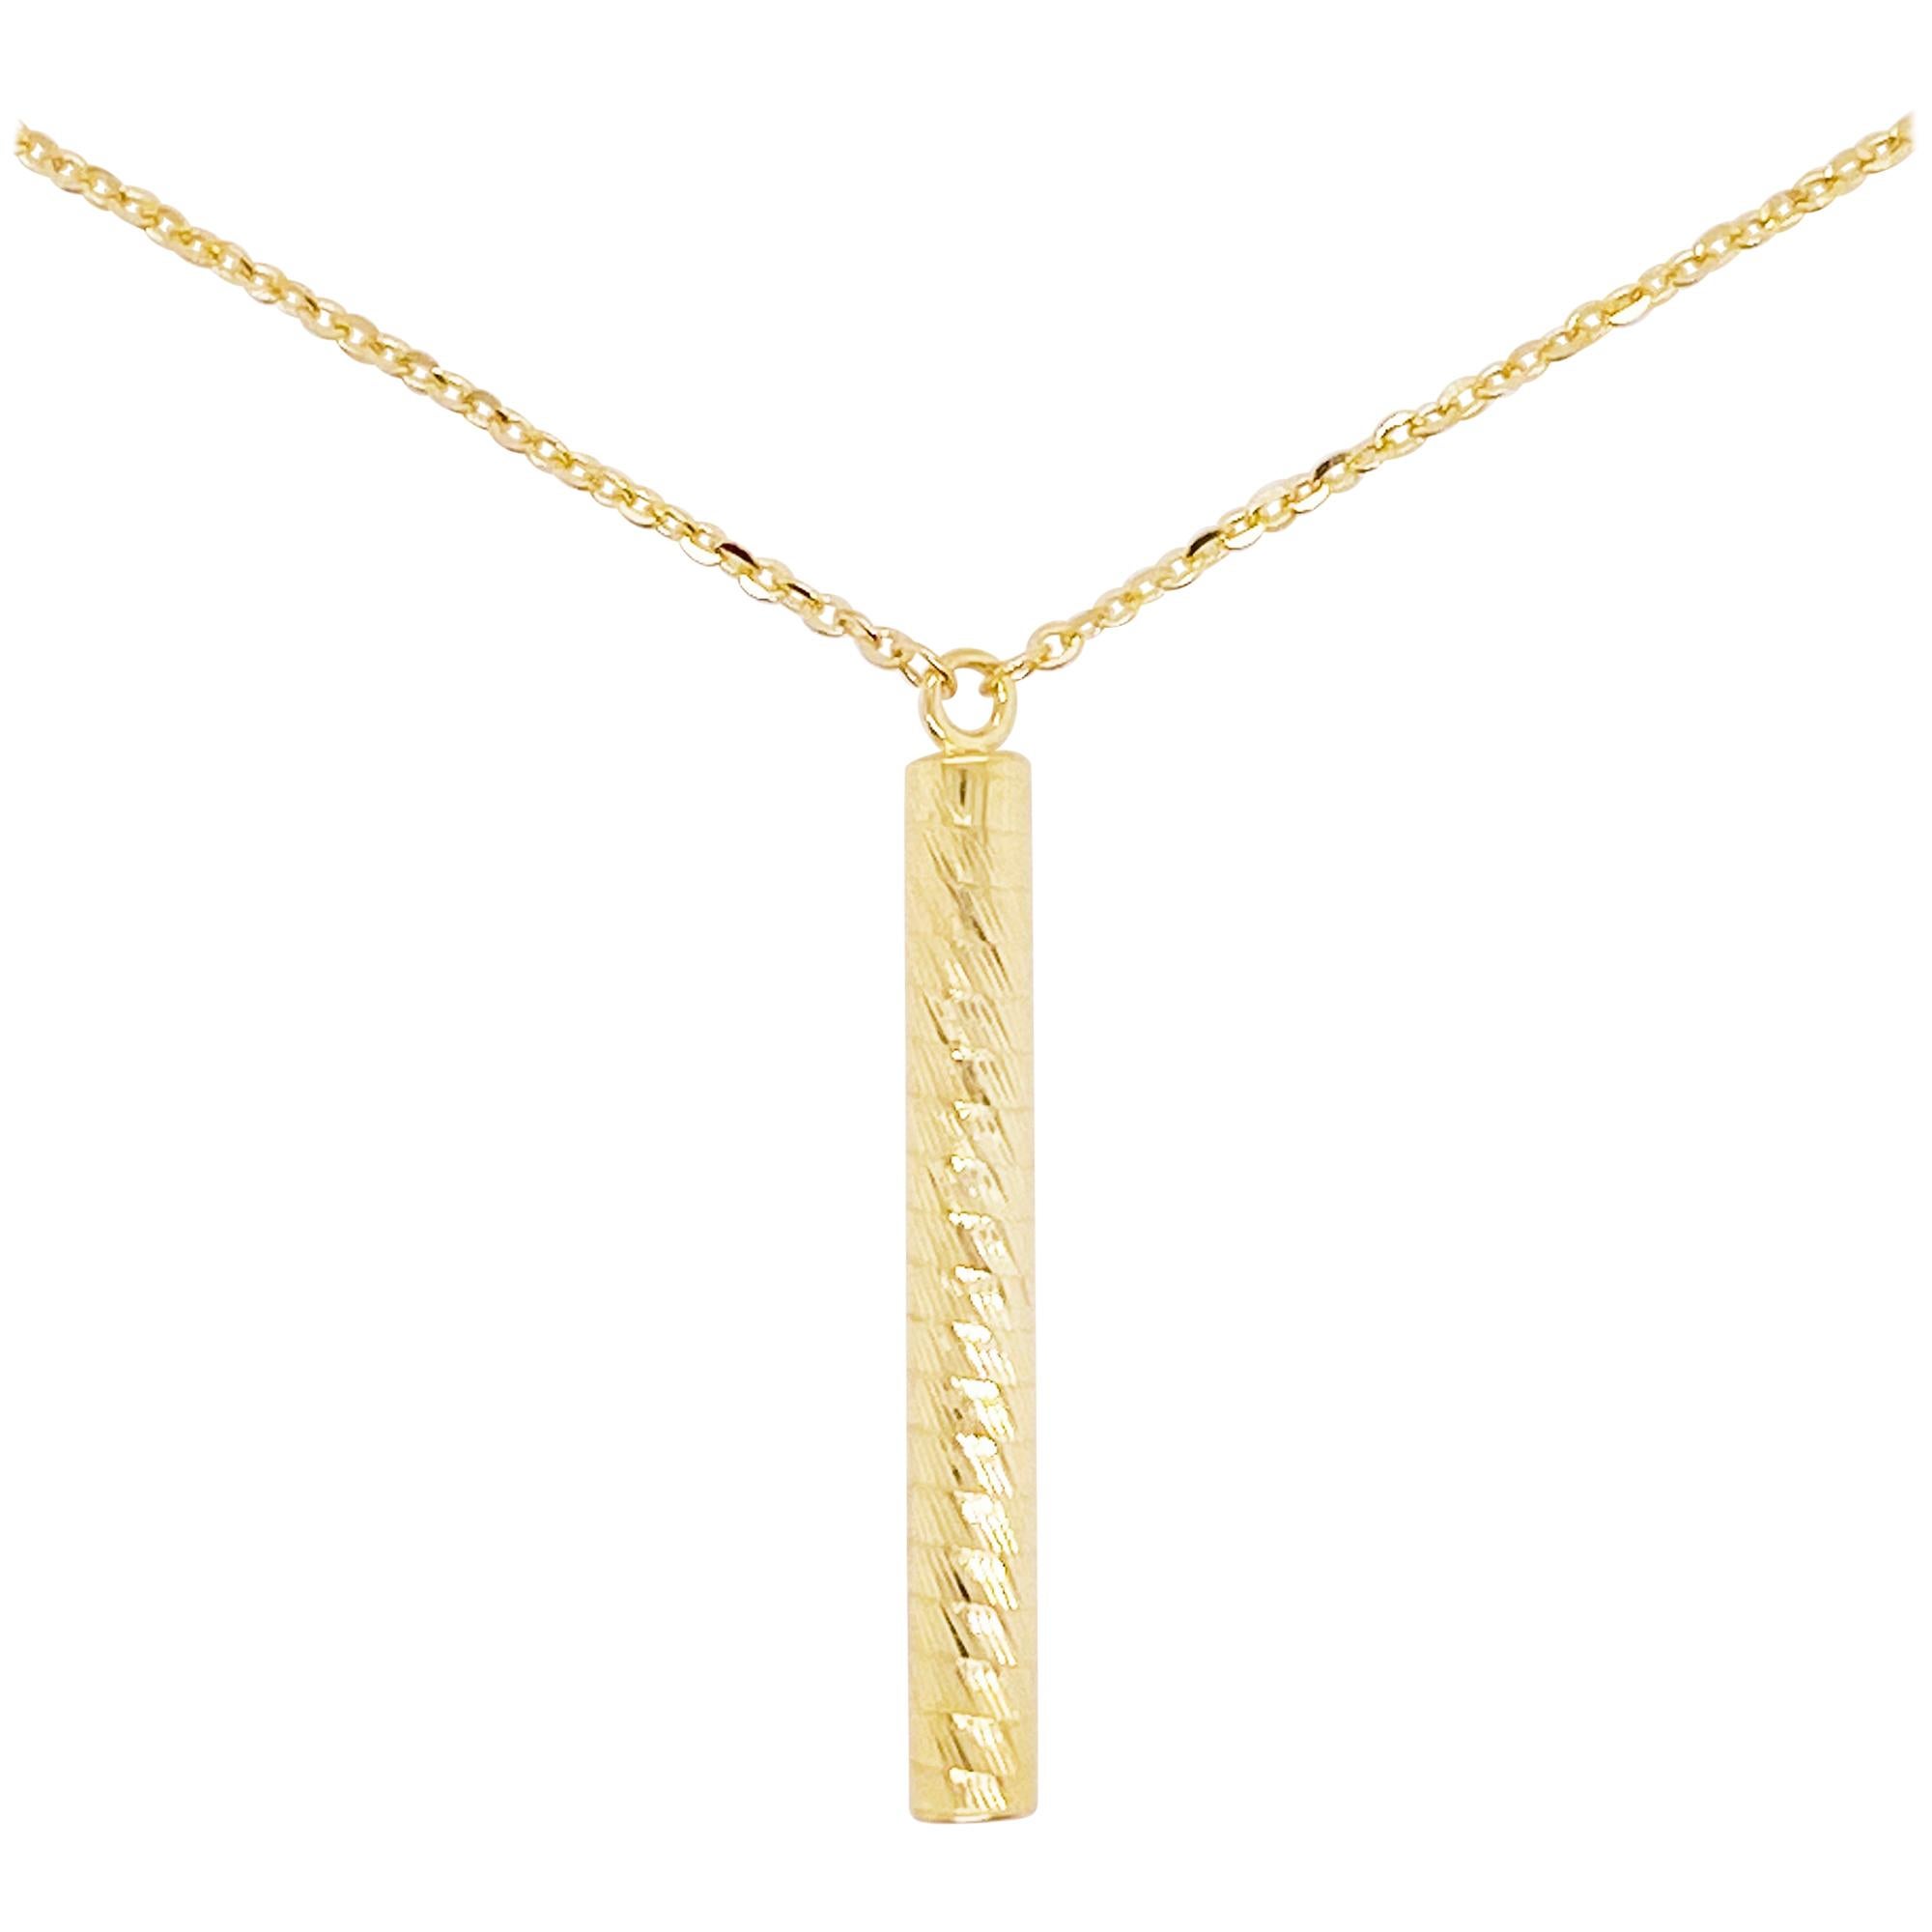 Gold Pendant Necklace, 14 Karat Gold, Textured Cylinder Pendant